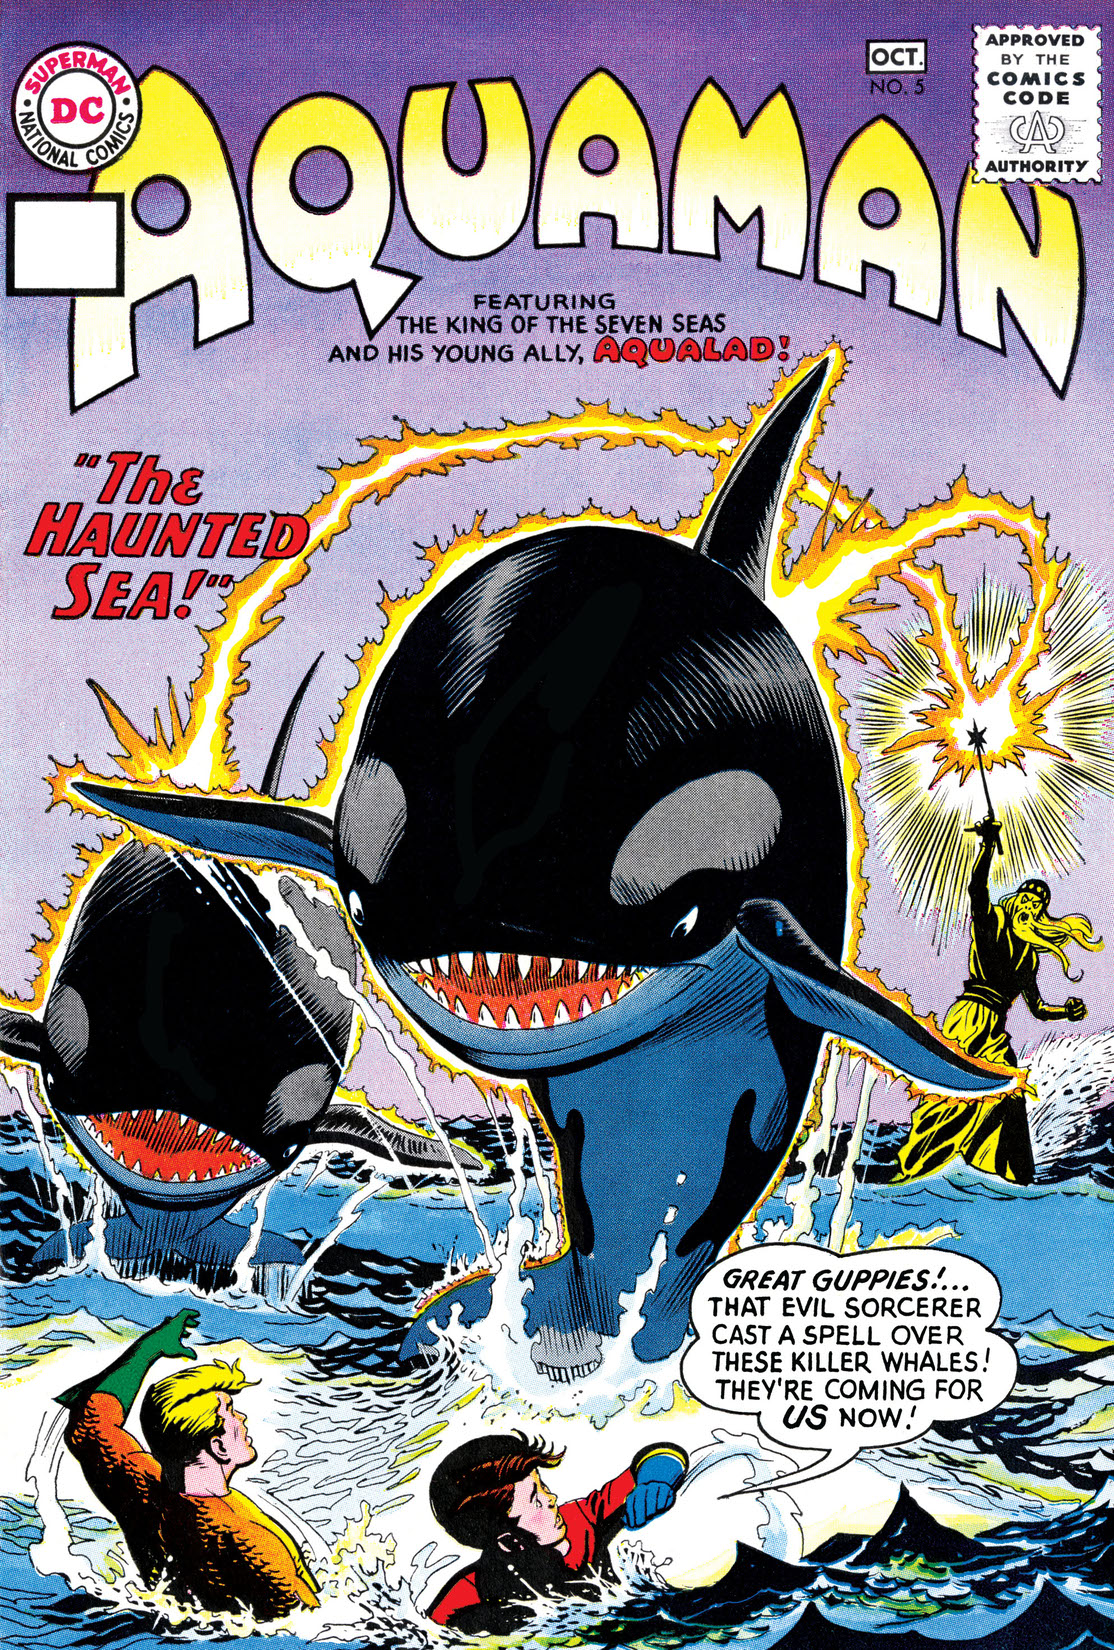 Aquaman (1962-) #5 preview images